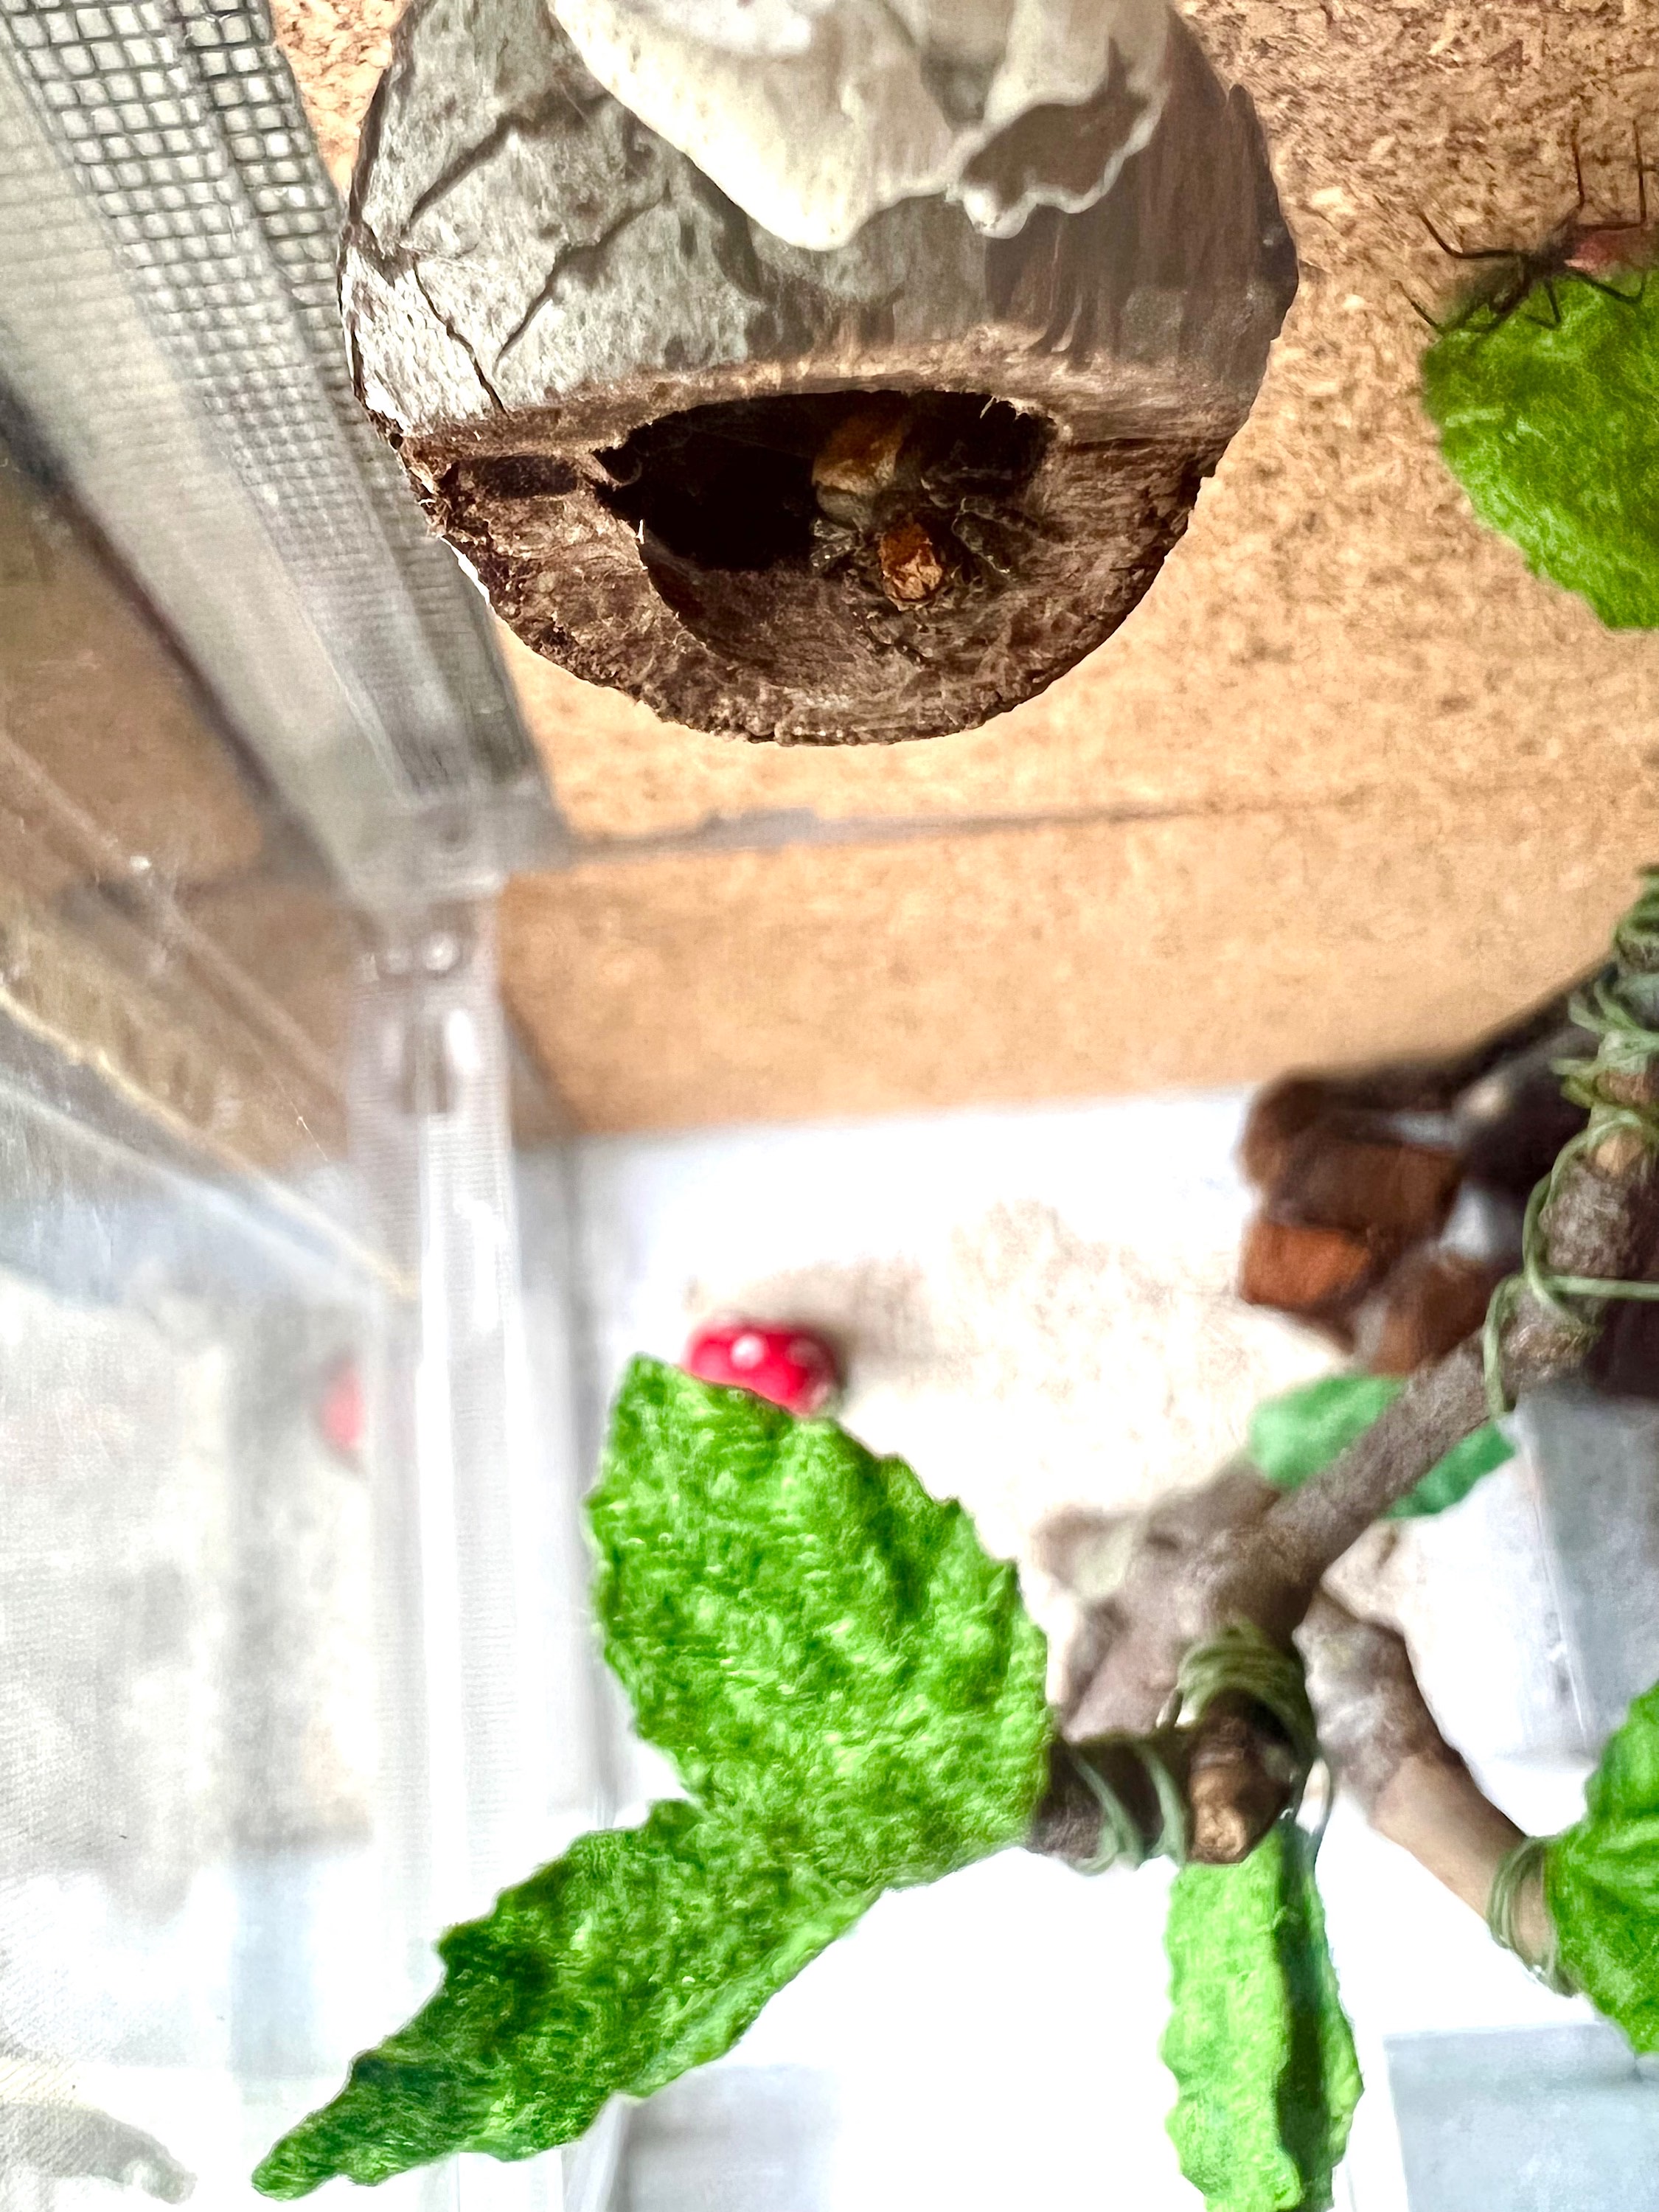 My jumping spider inside a gumnut hide